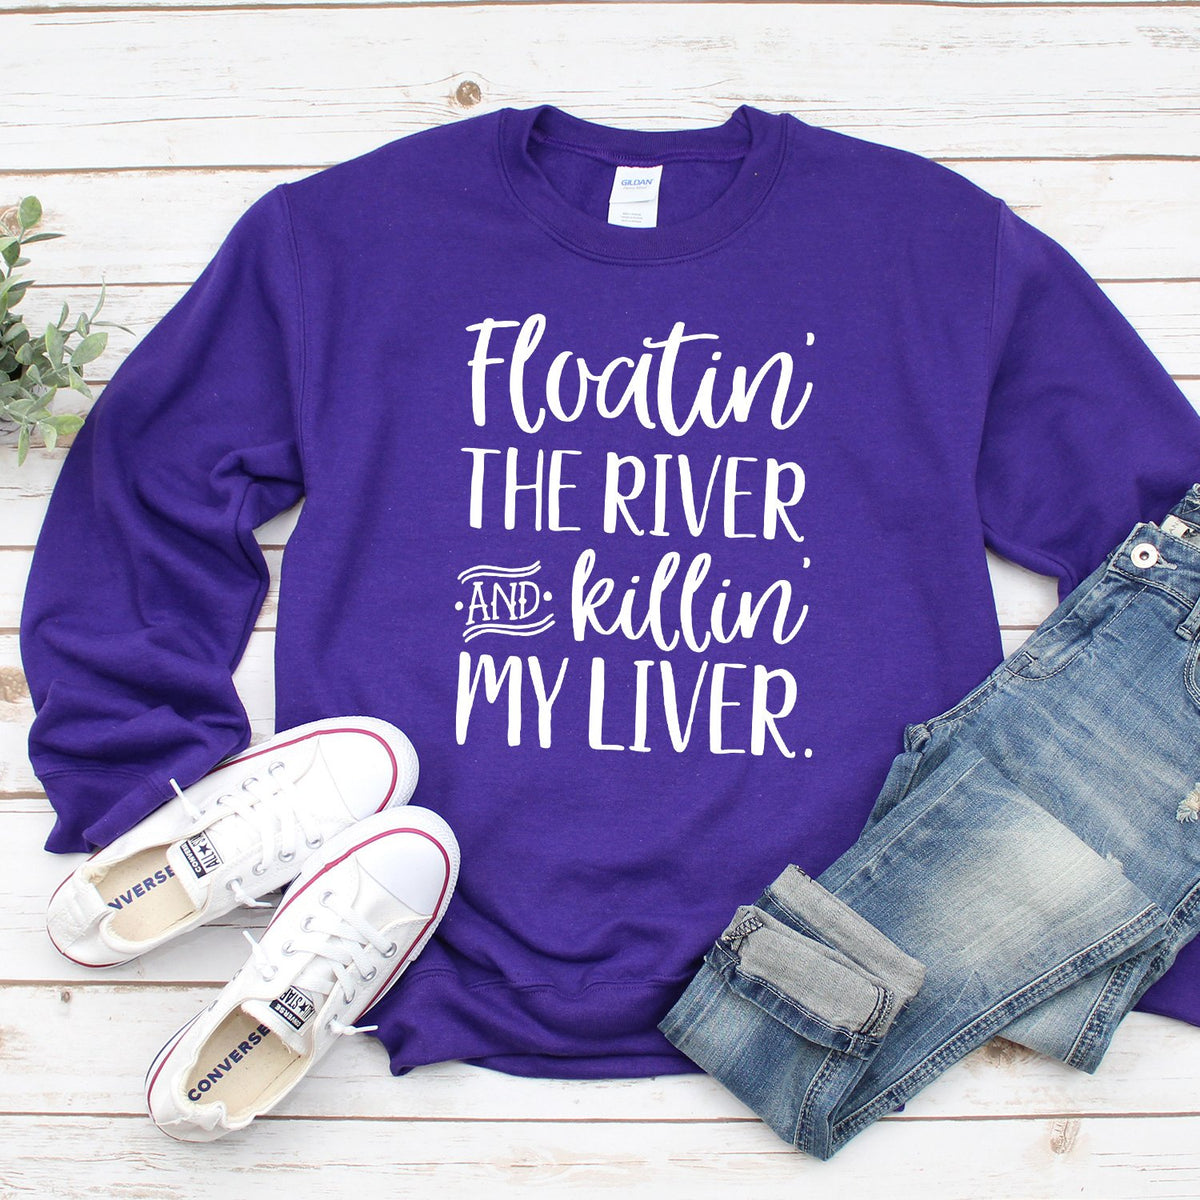 Floatin the River and Killin My Liver - Long Sleeve Heavy Crewneck Sweatshirt